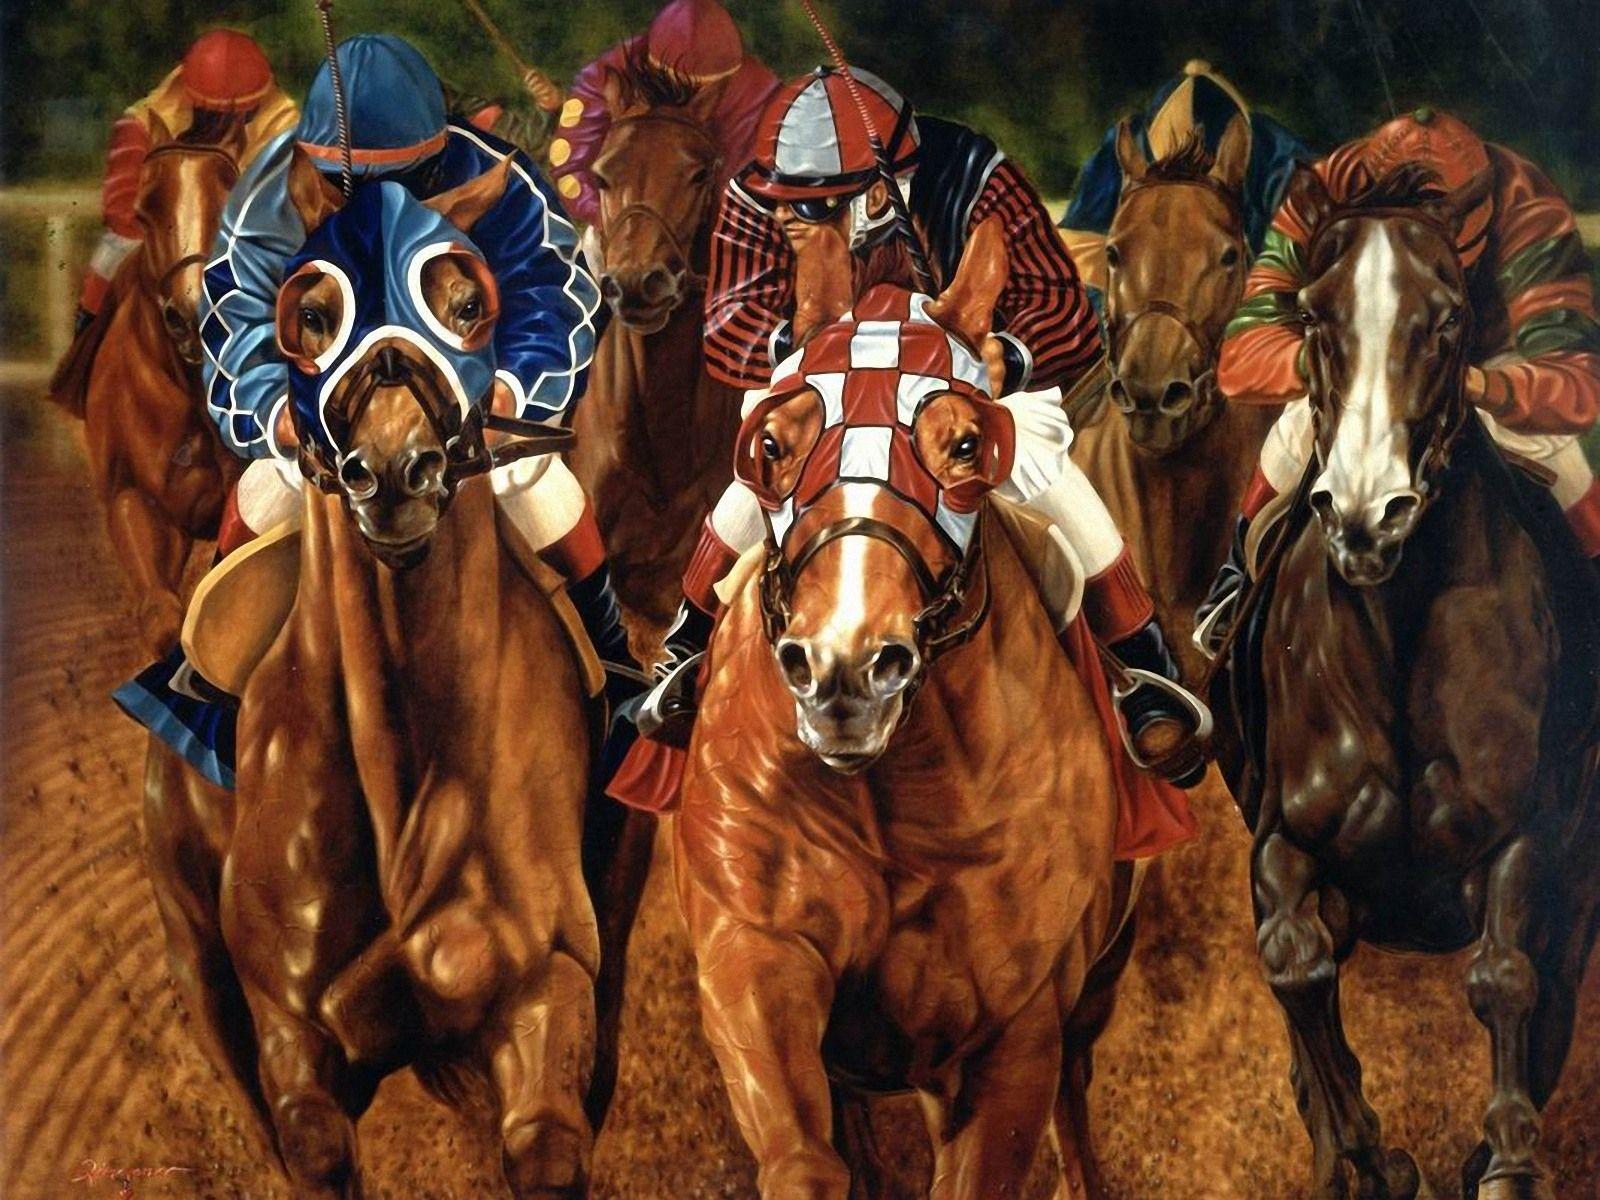 equine artists. Horse Racing art 1600x1200 Wallpaper, 1600x1200